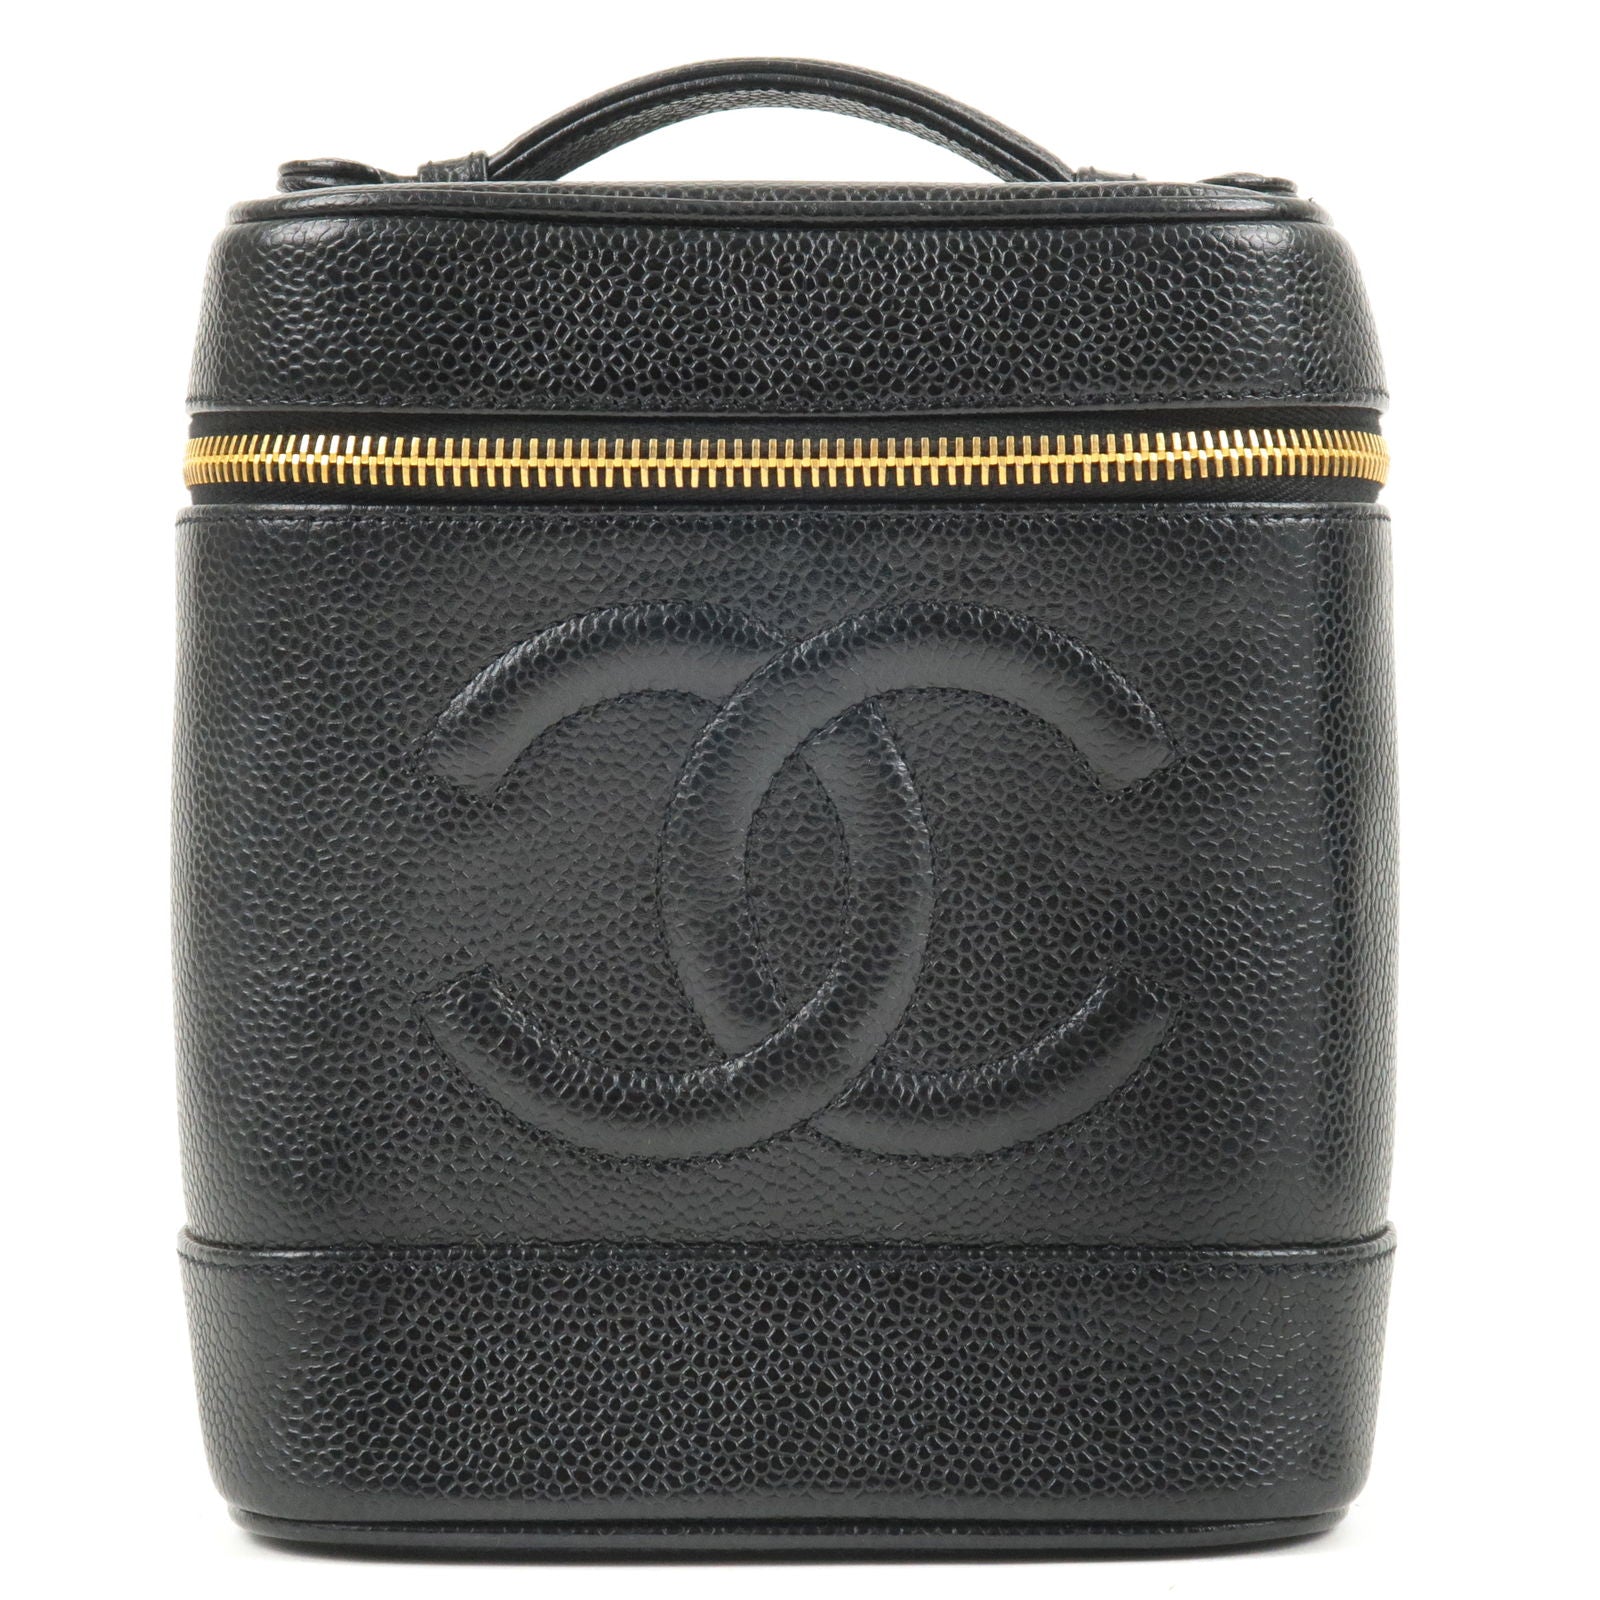 Chanel Vintage Chanel Vanity Black Caviar Leather Medium Cosmetic